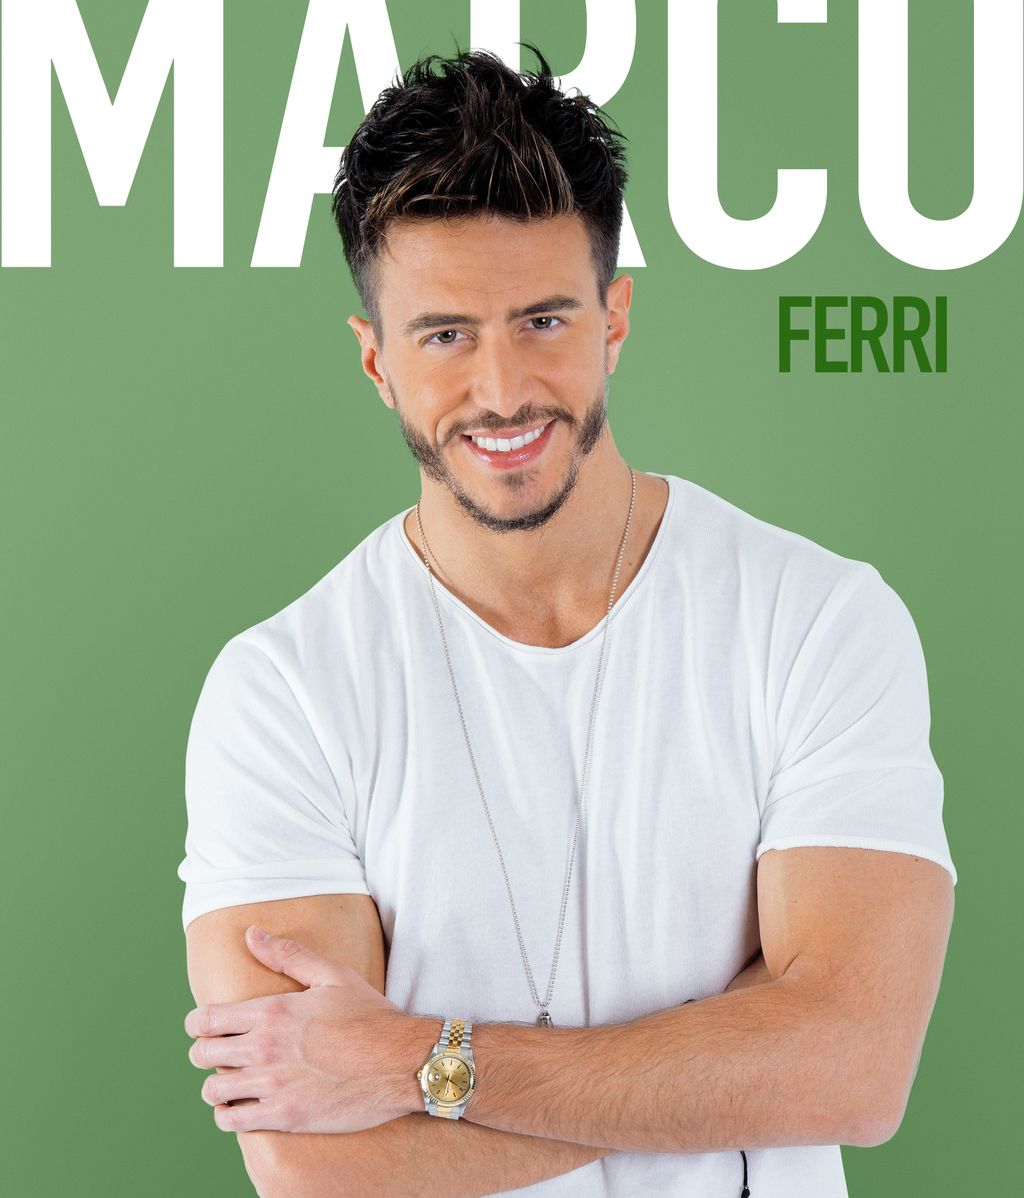 Marco Ferri, 28 años